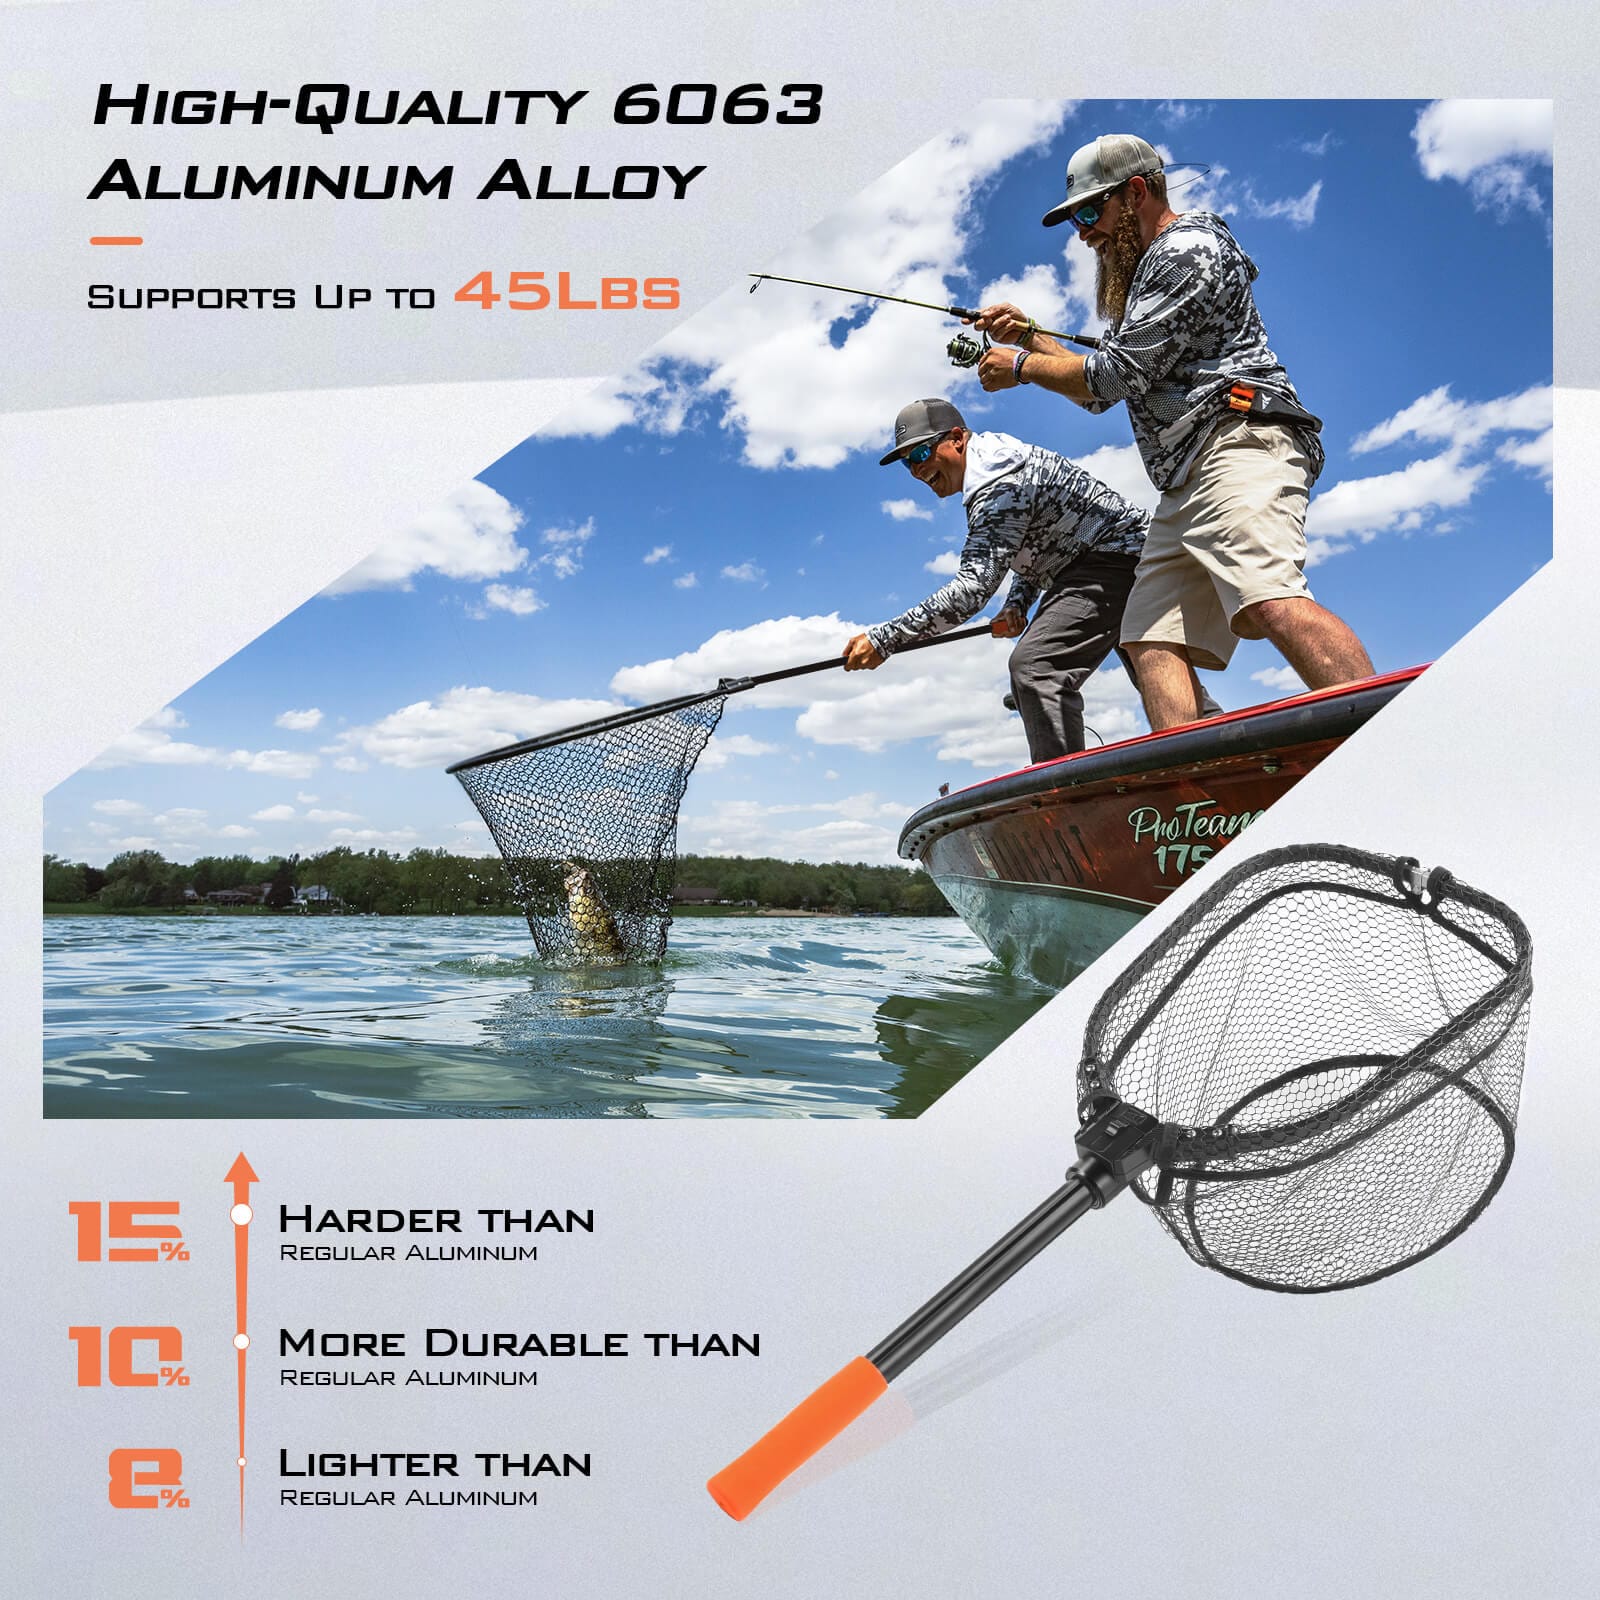 Aluminum Alloy 80cm Retractable Fishing Net Telescoping Foldable